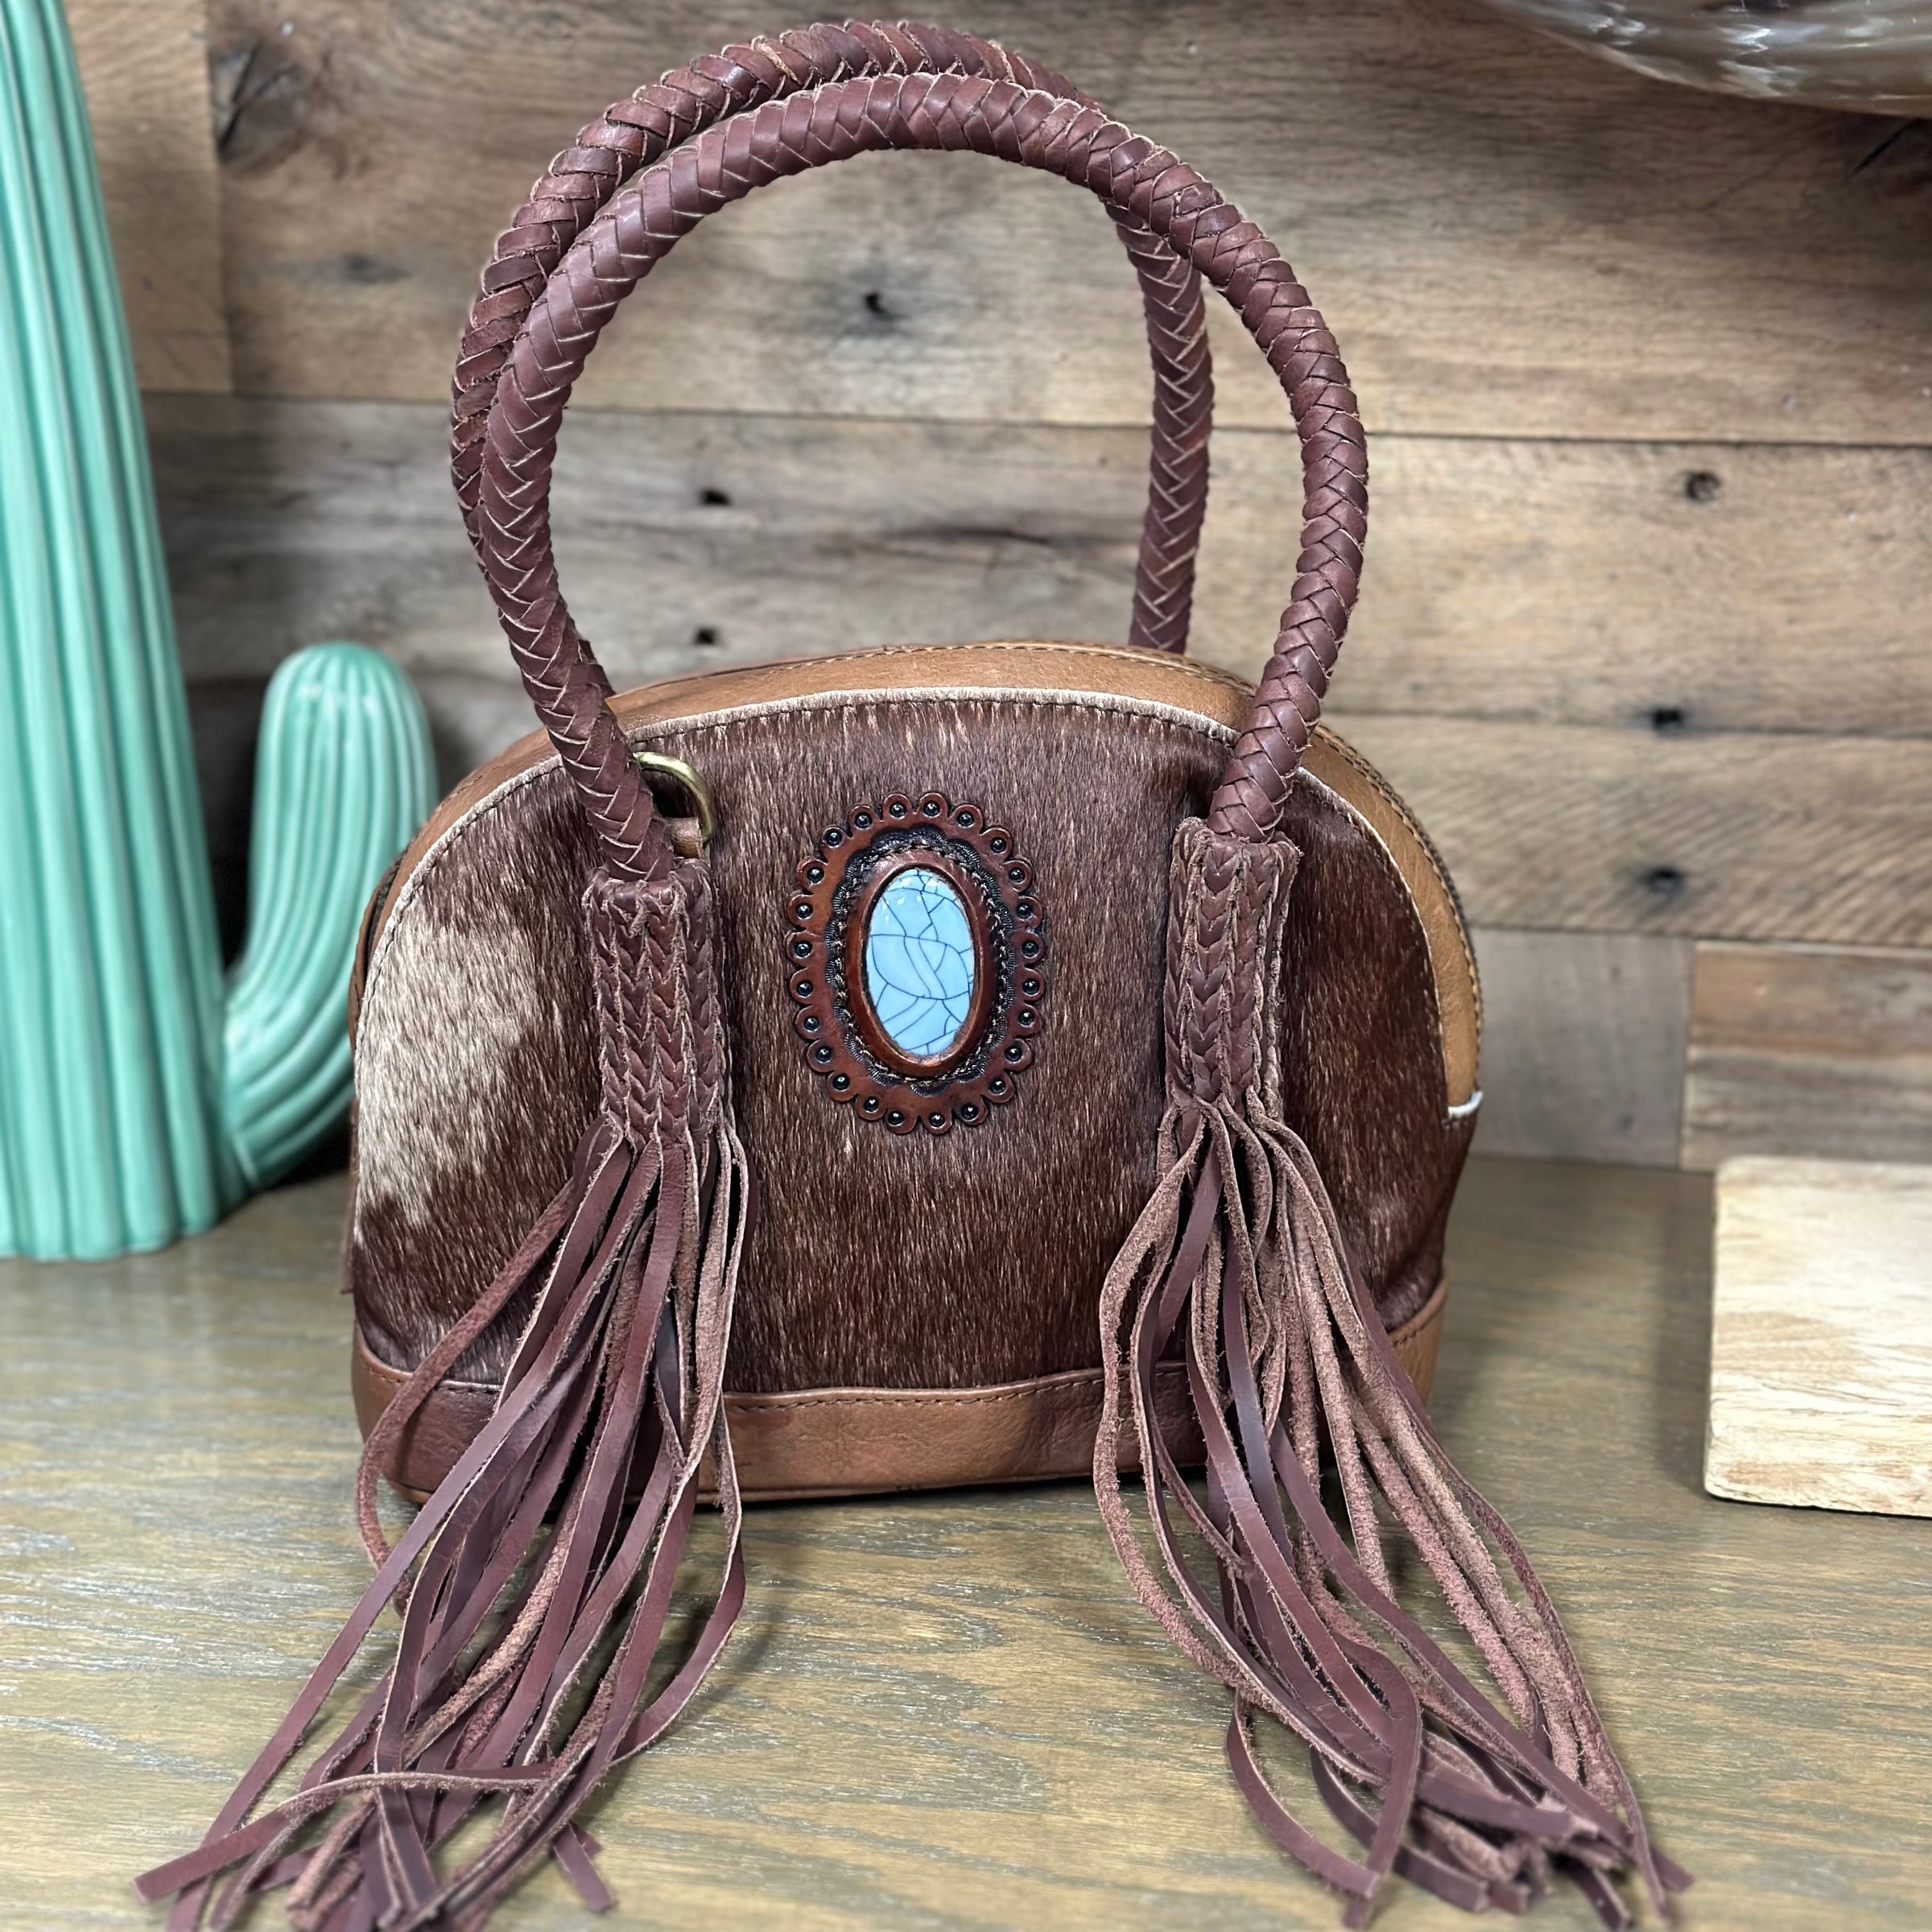 Wrangler Leather Fringe Hobo Bag with Turquoise Concho - Beige